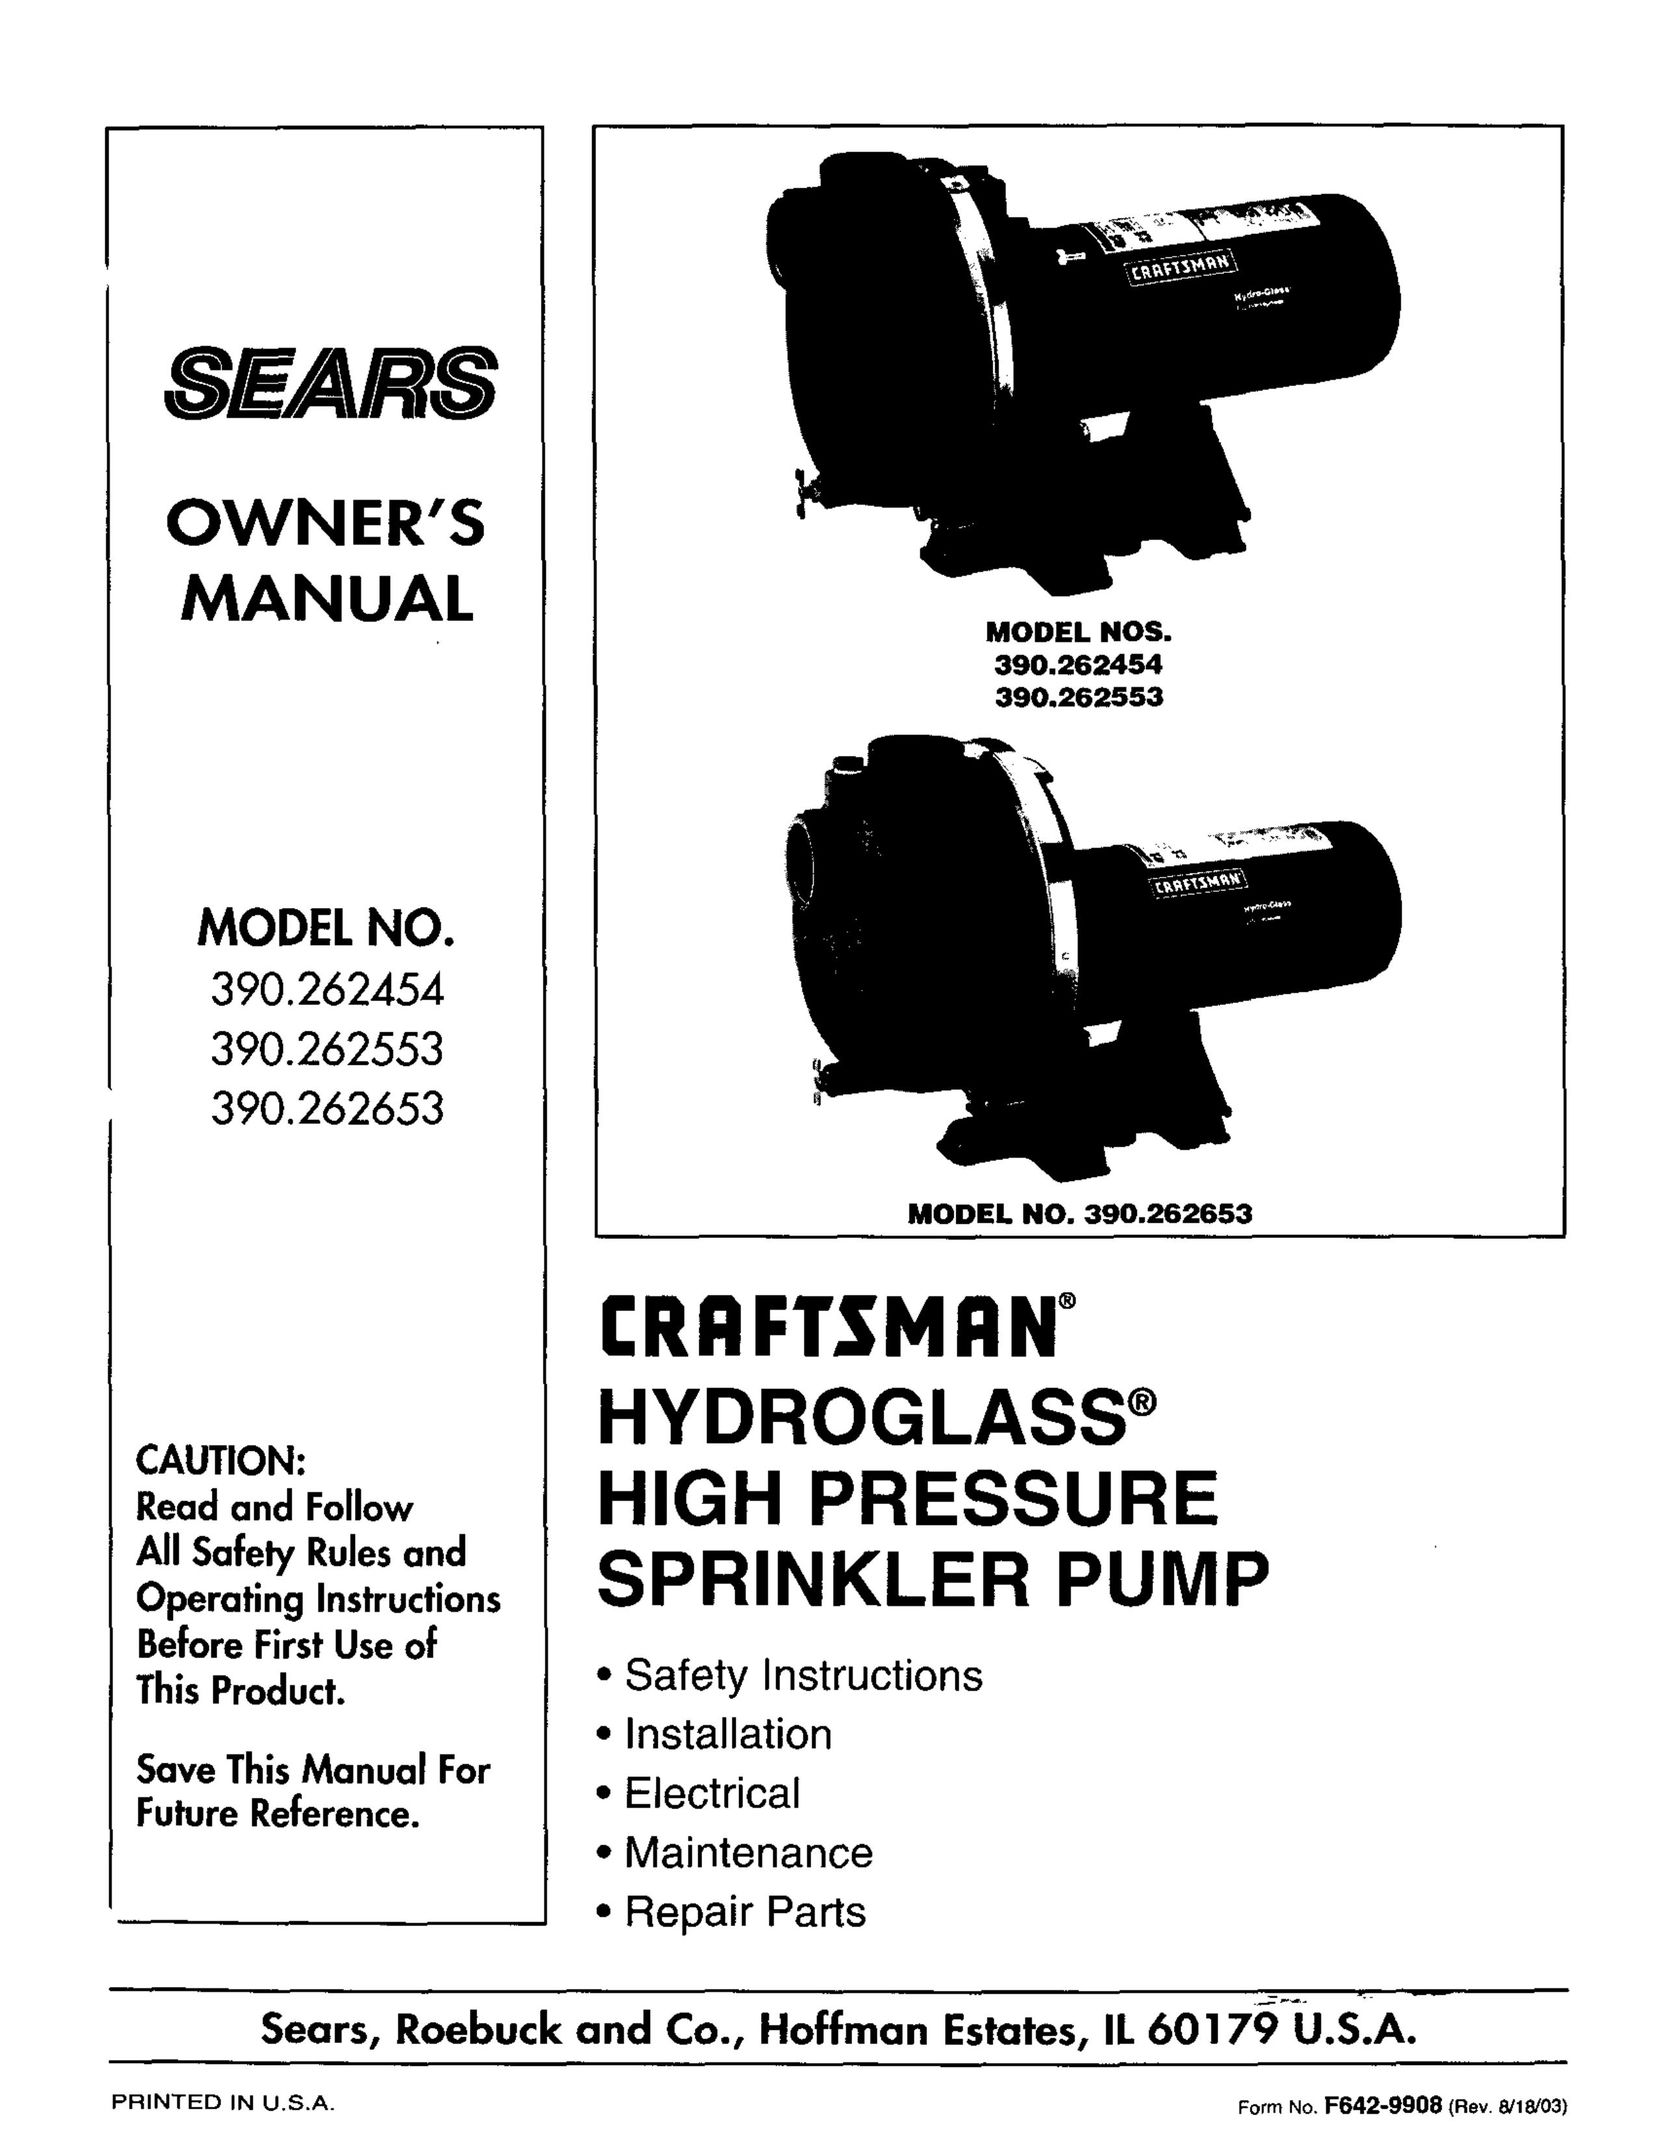 Craftsman 390.262653 Water Pump User Manual